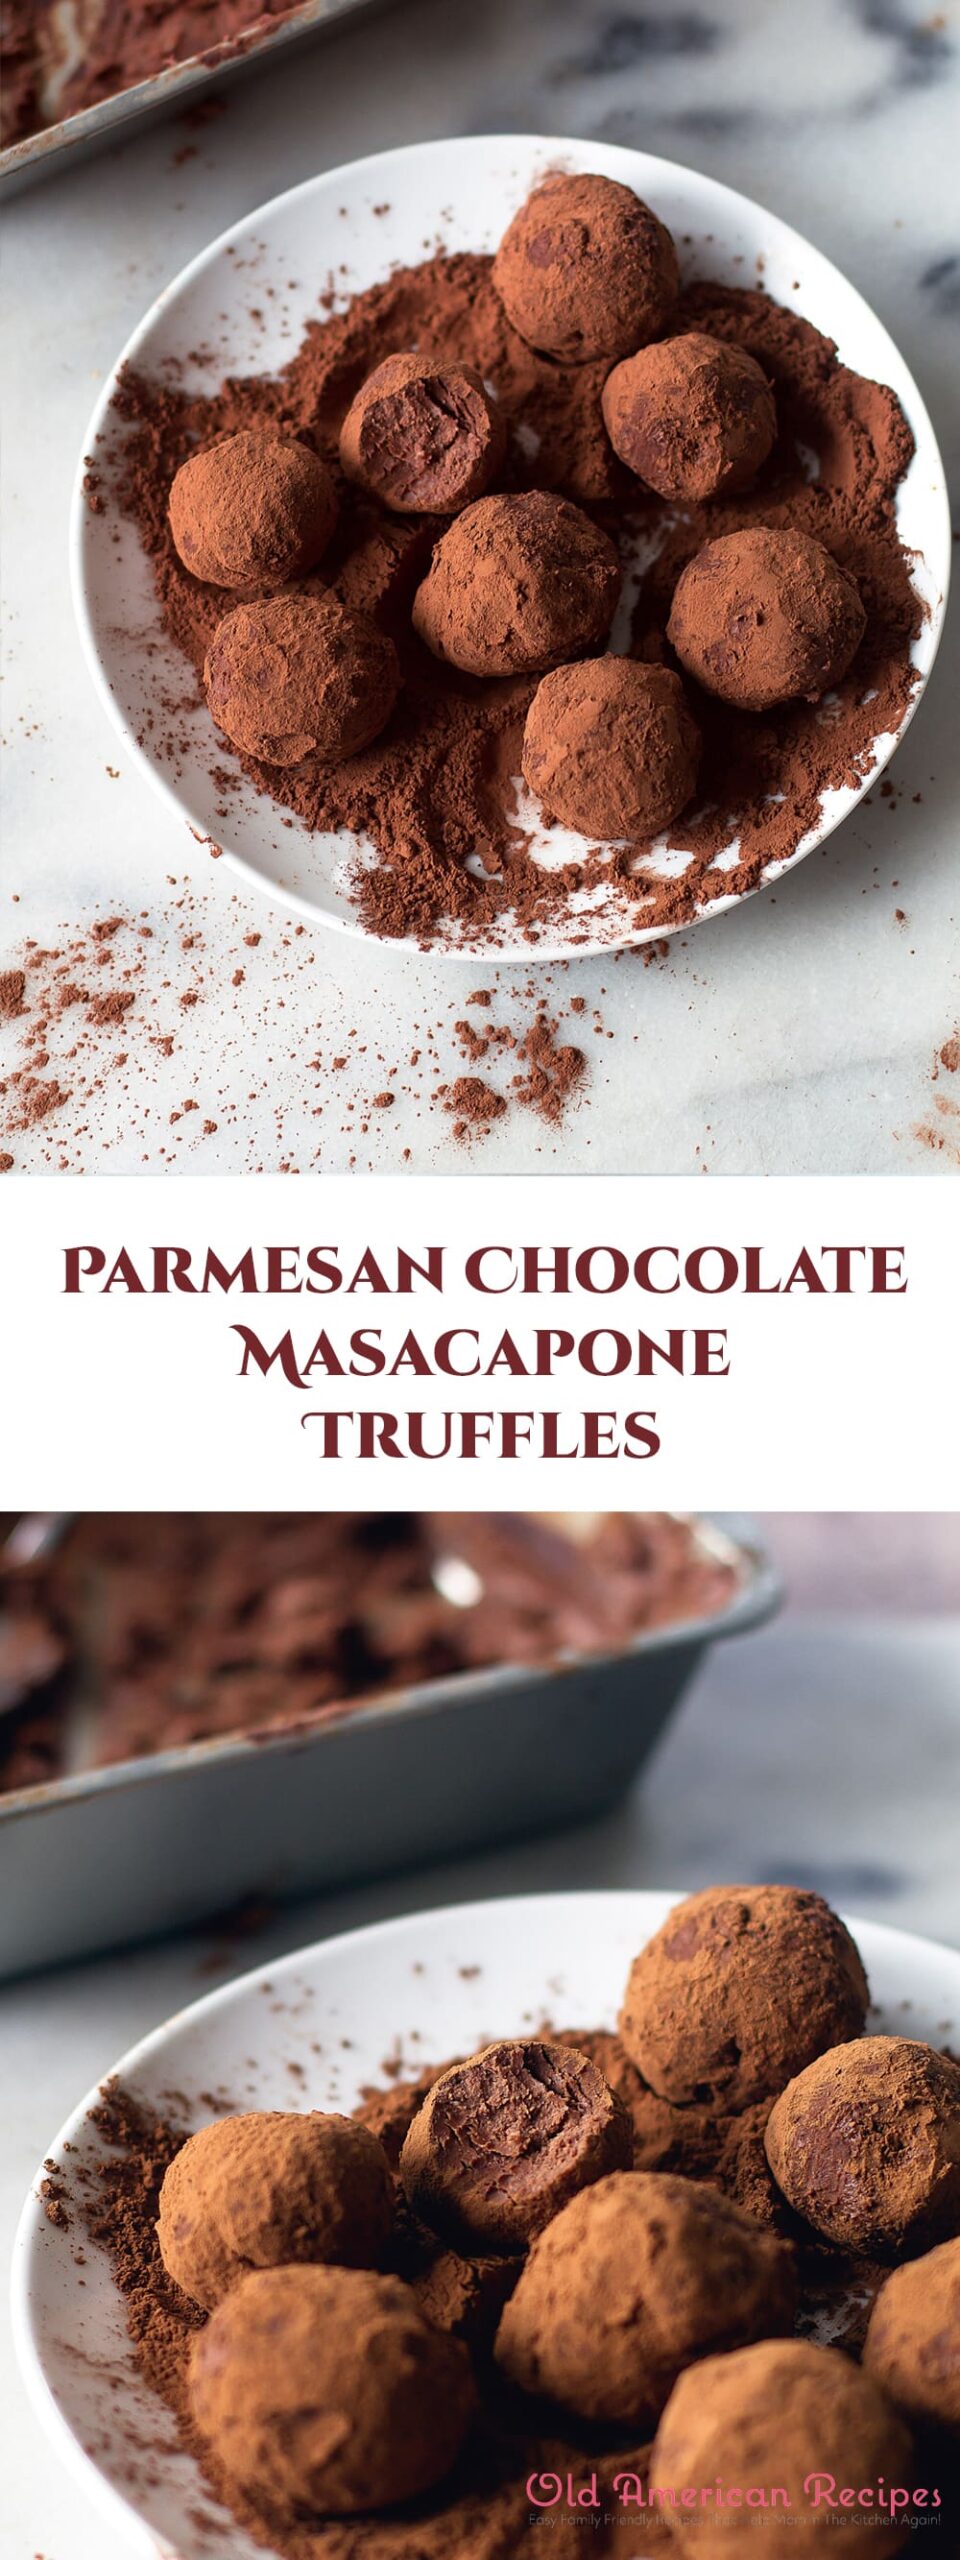 Parmesan Chocolate Masacapone Truffles